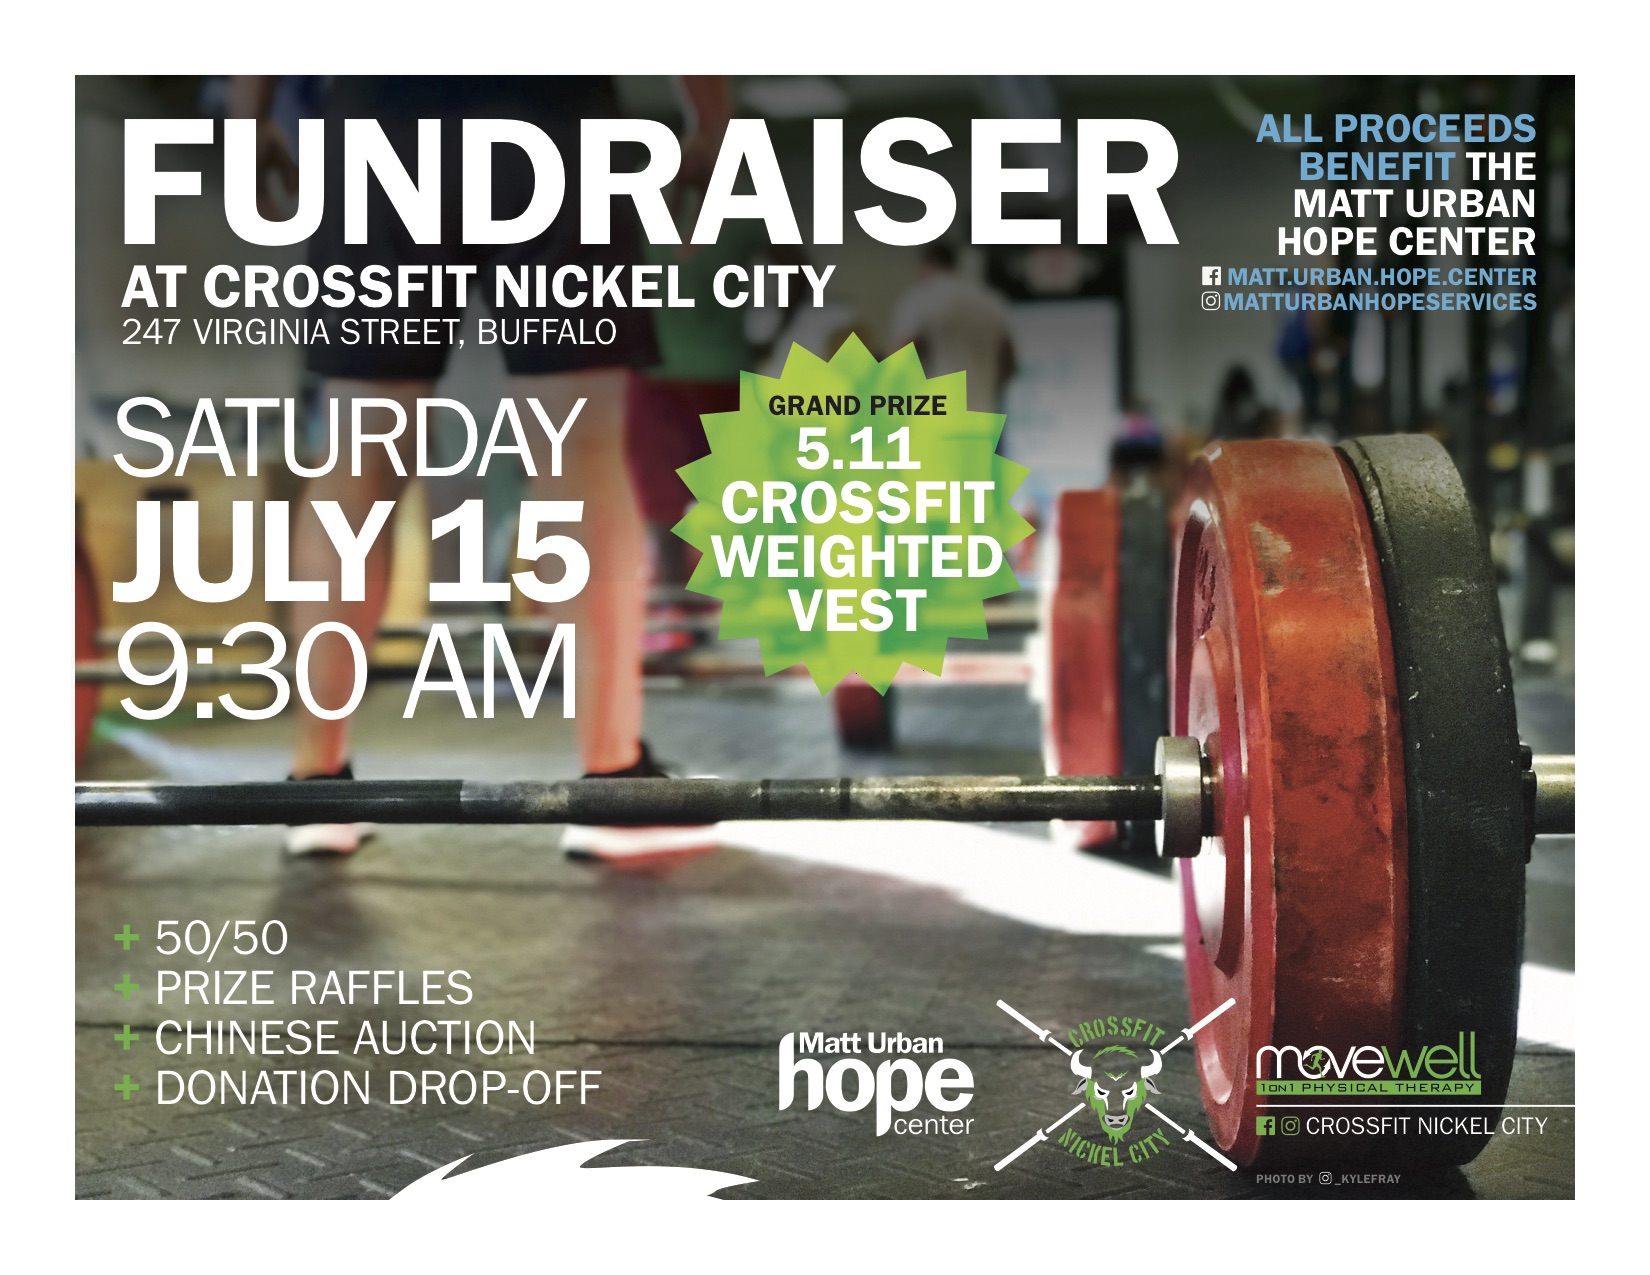 CrossFit event to benefit Matt Urban Hope Center